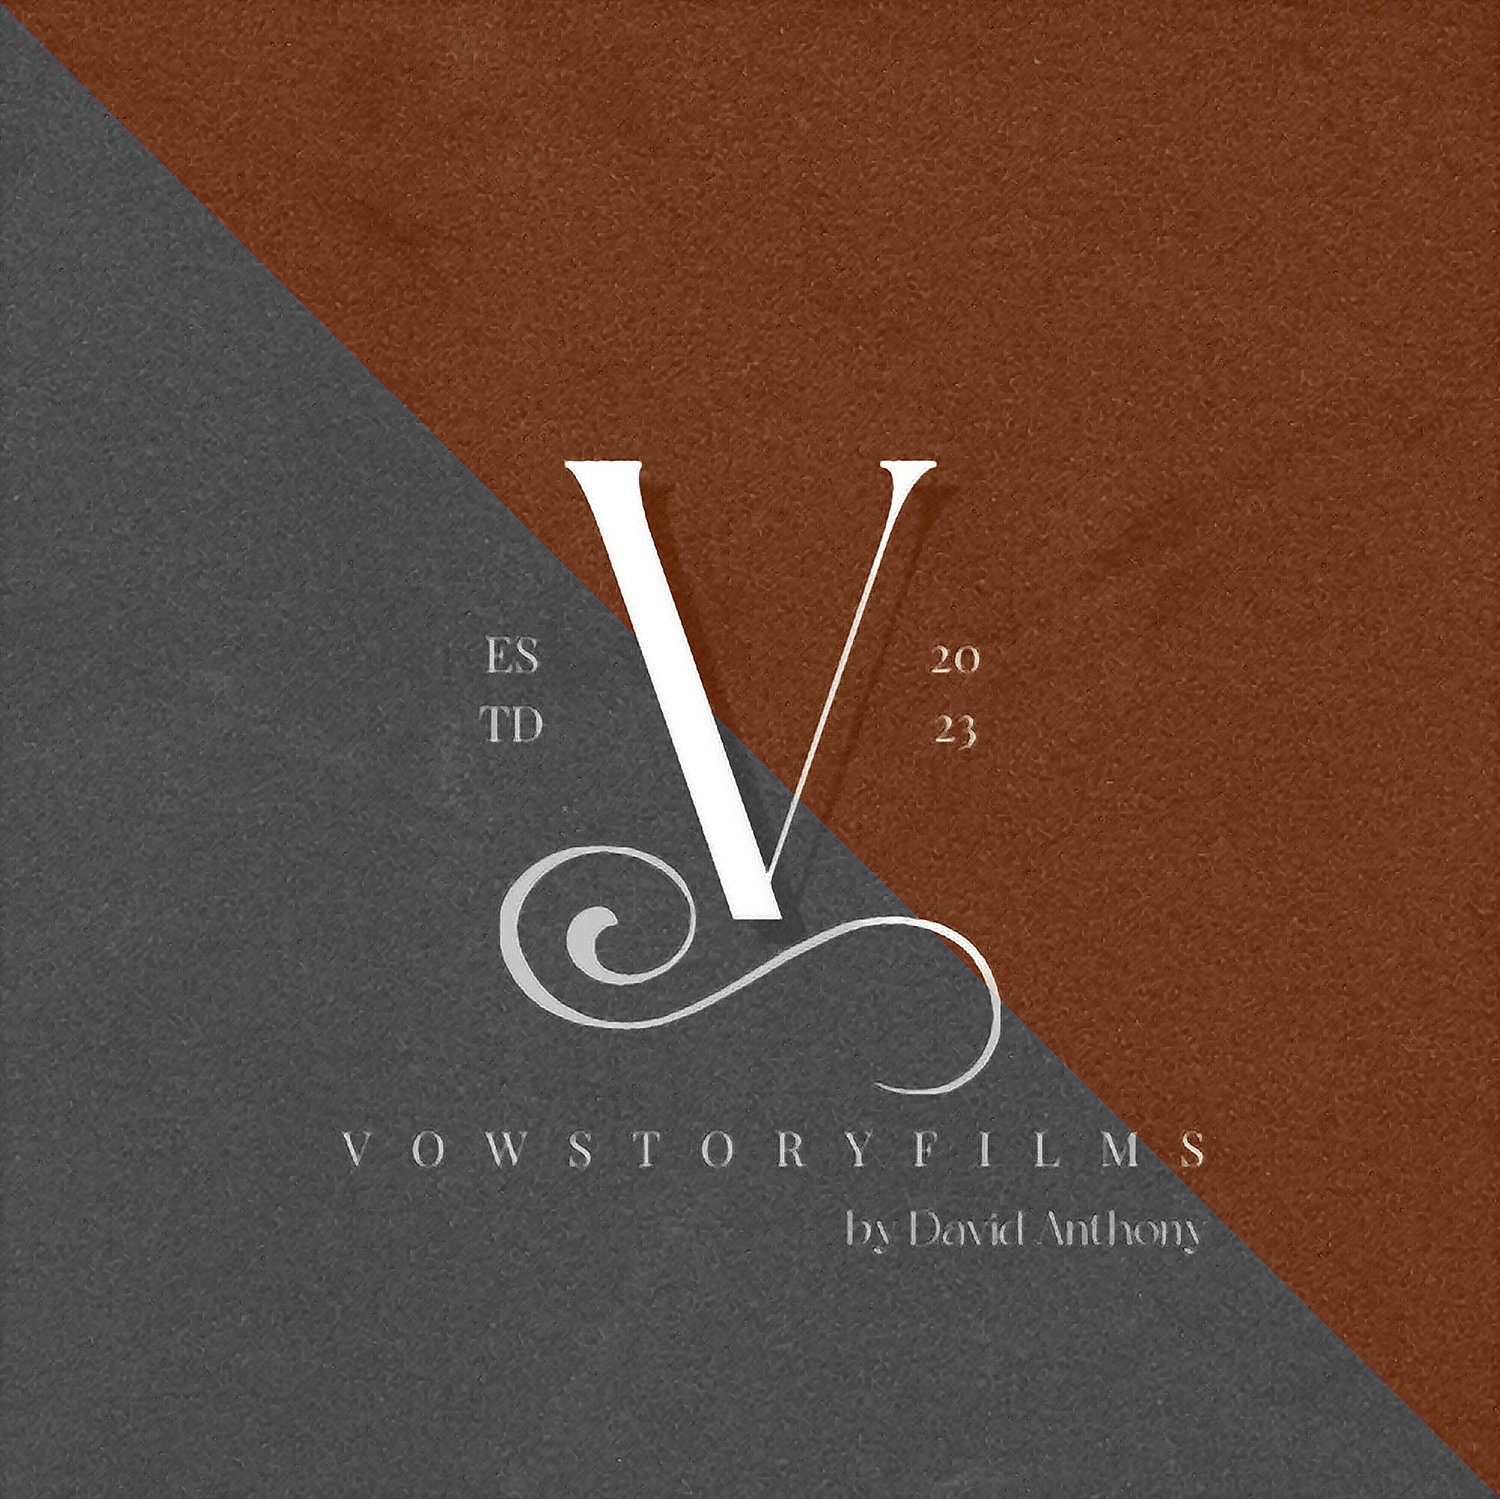 VowStoryFilms by David Anthony